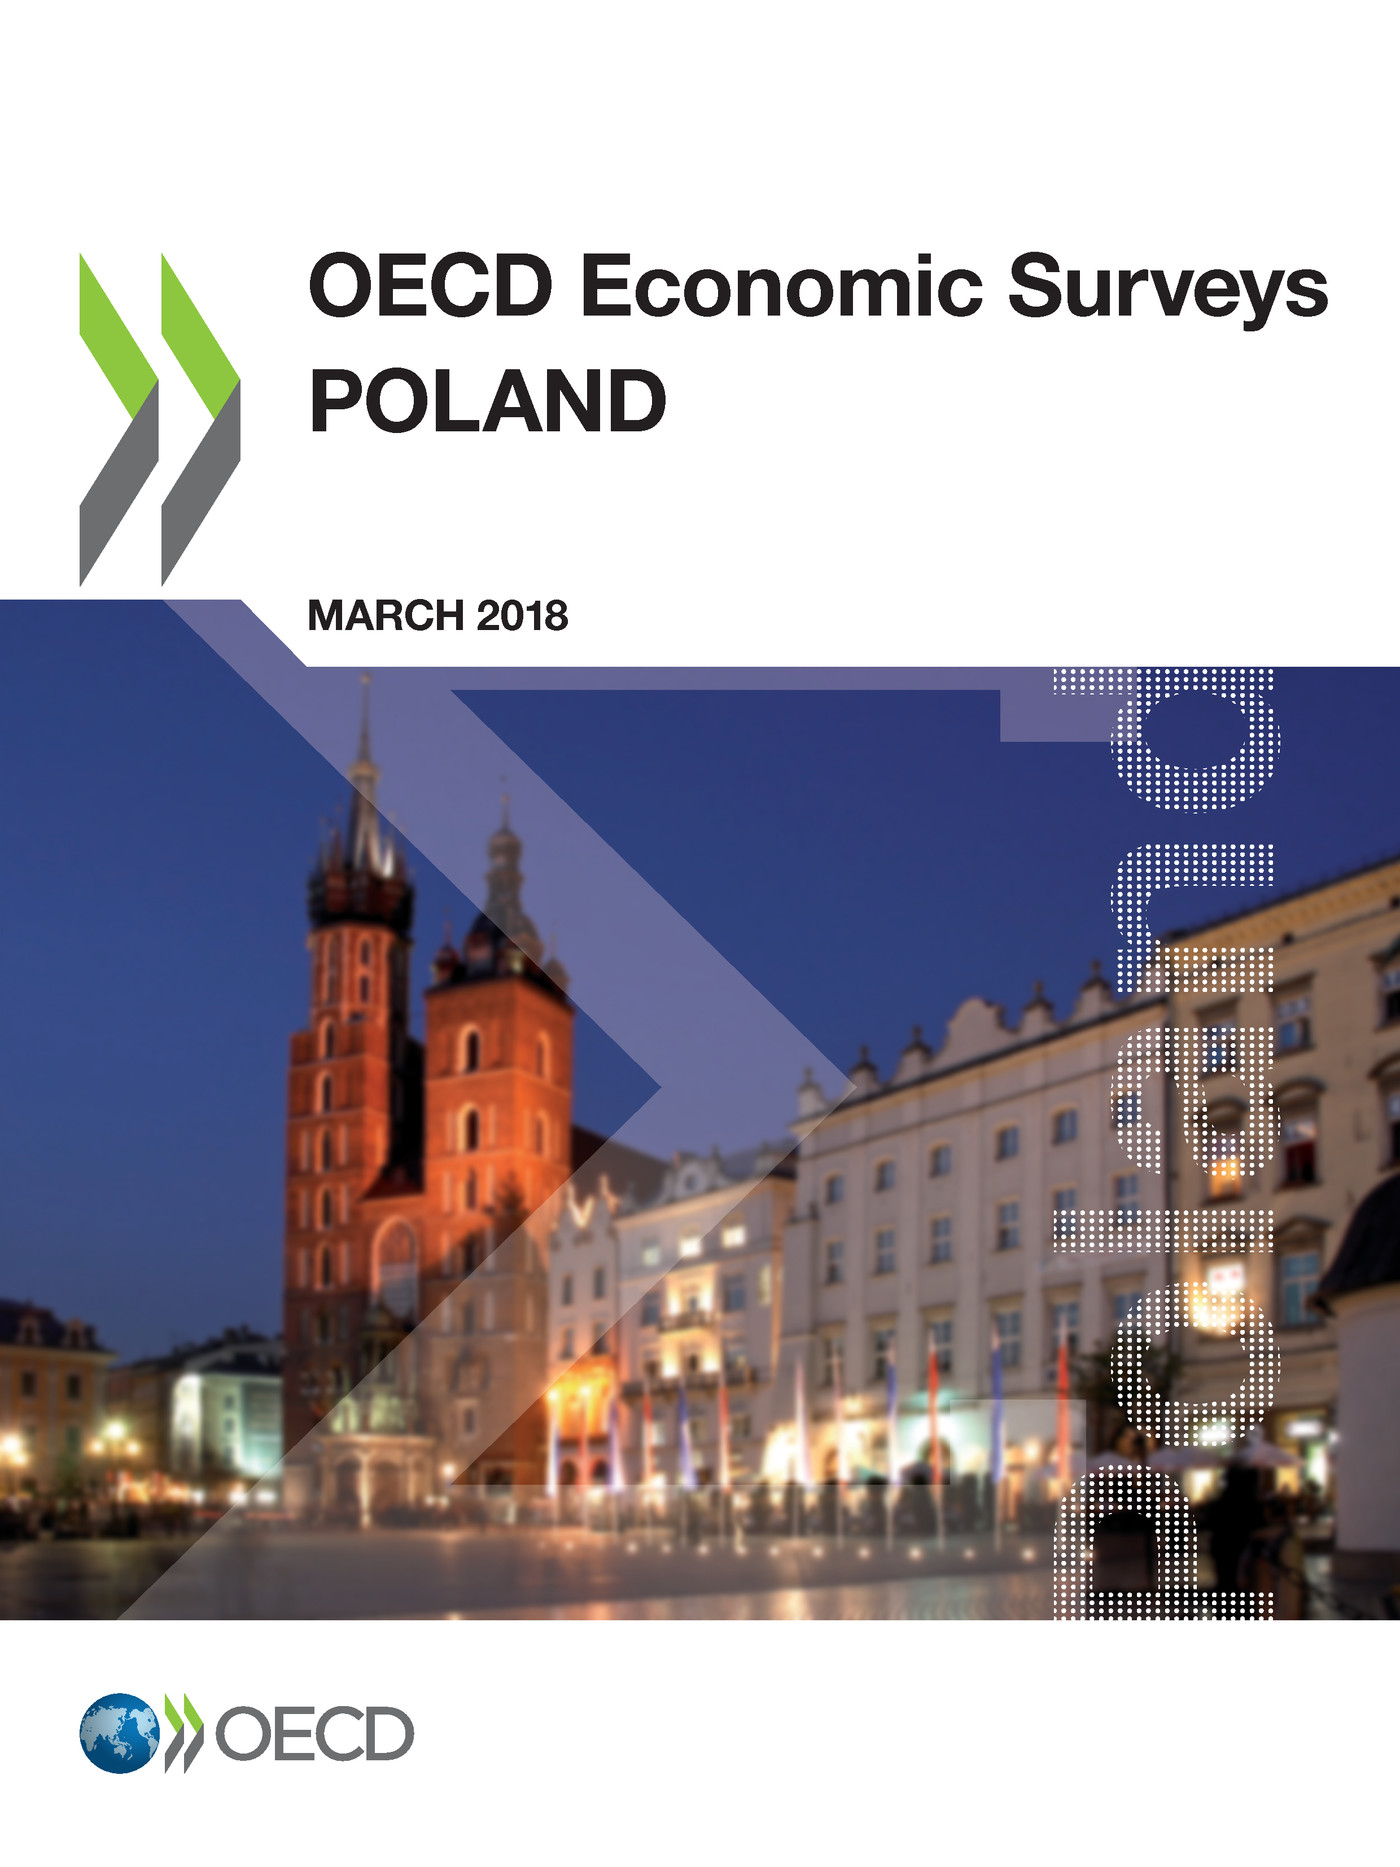 OECD Economic Surveys: Poland 2018 -  Collectif - OCDE / OECD